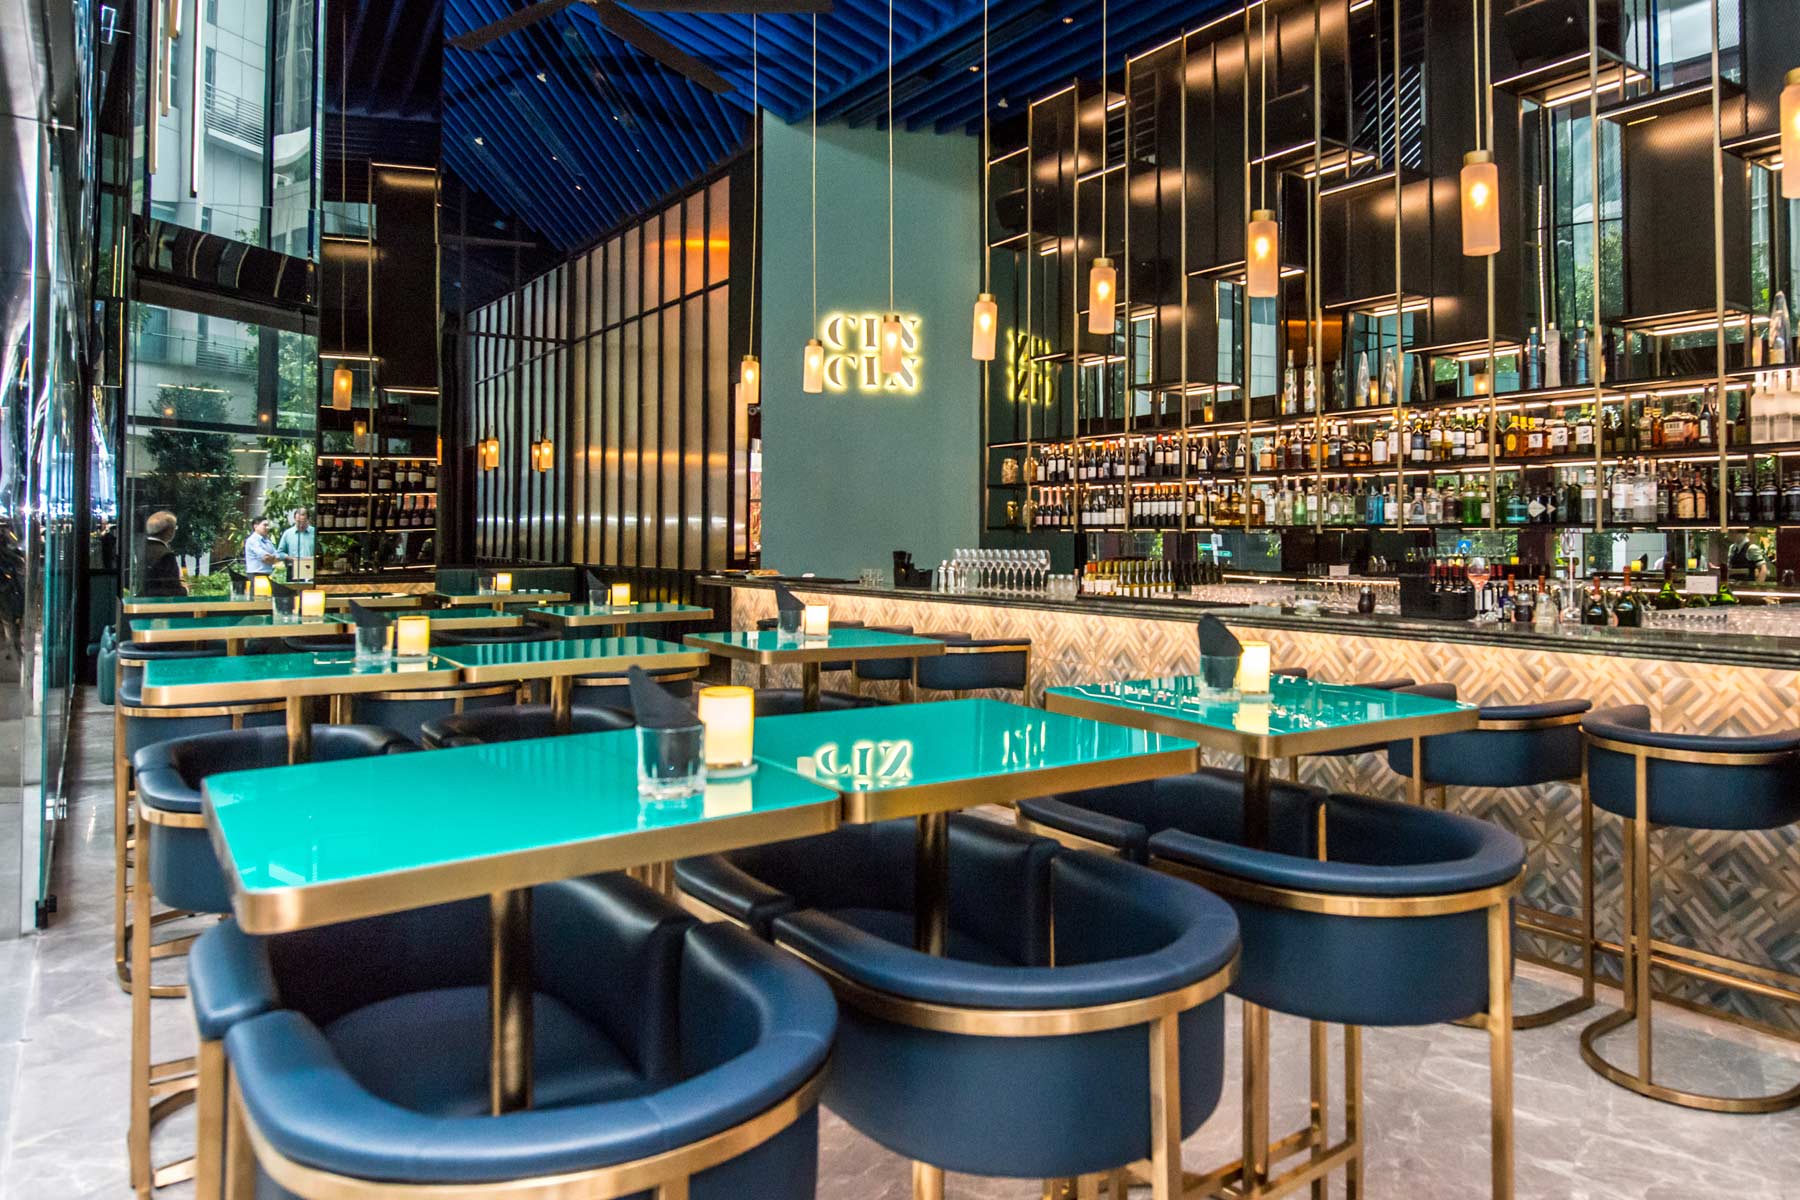 Oasia Hotel Downtown Singapore - CIN CIN Bar